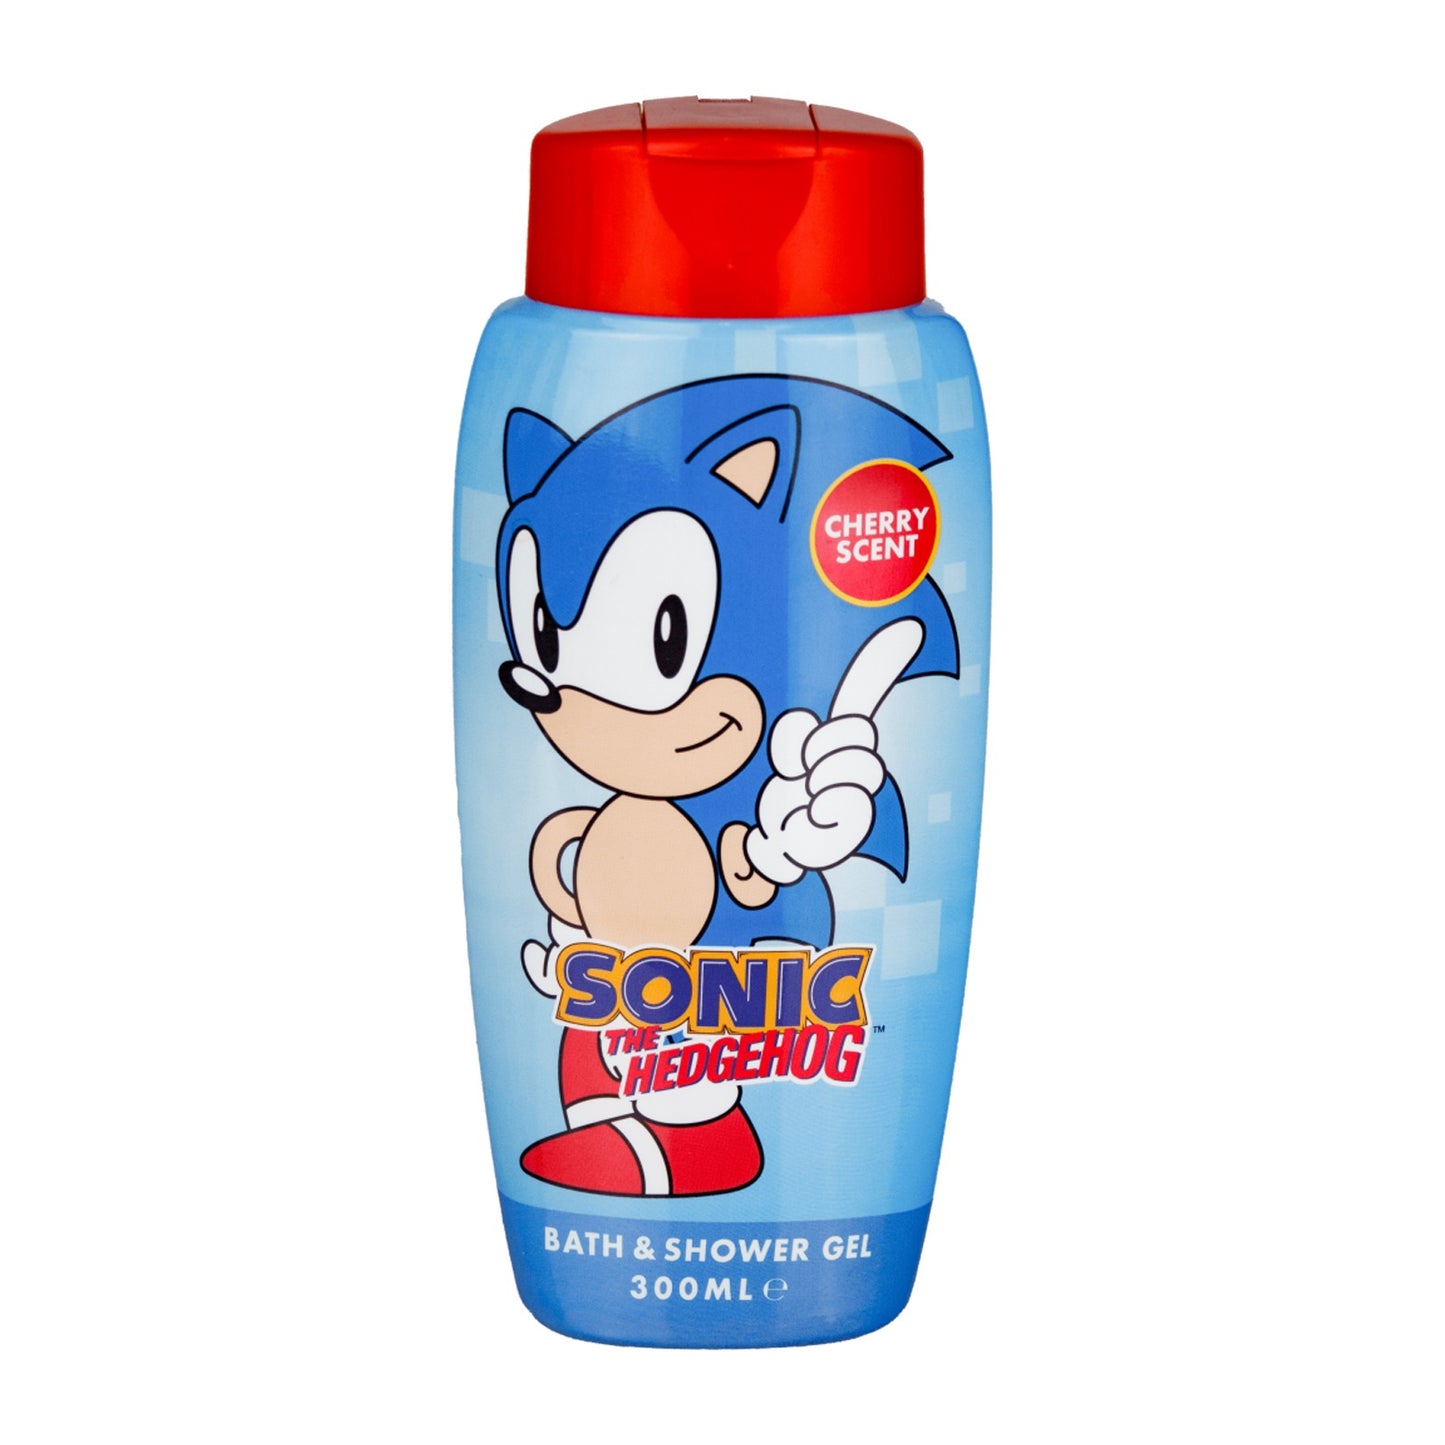 £1.99 Sonic Shower Gel (12)